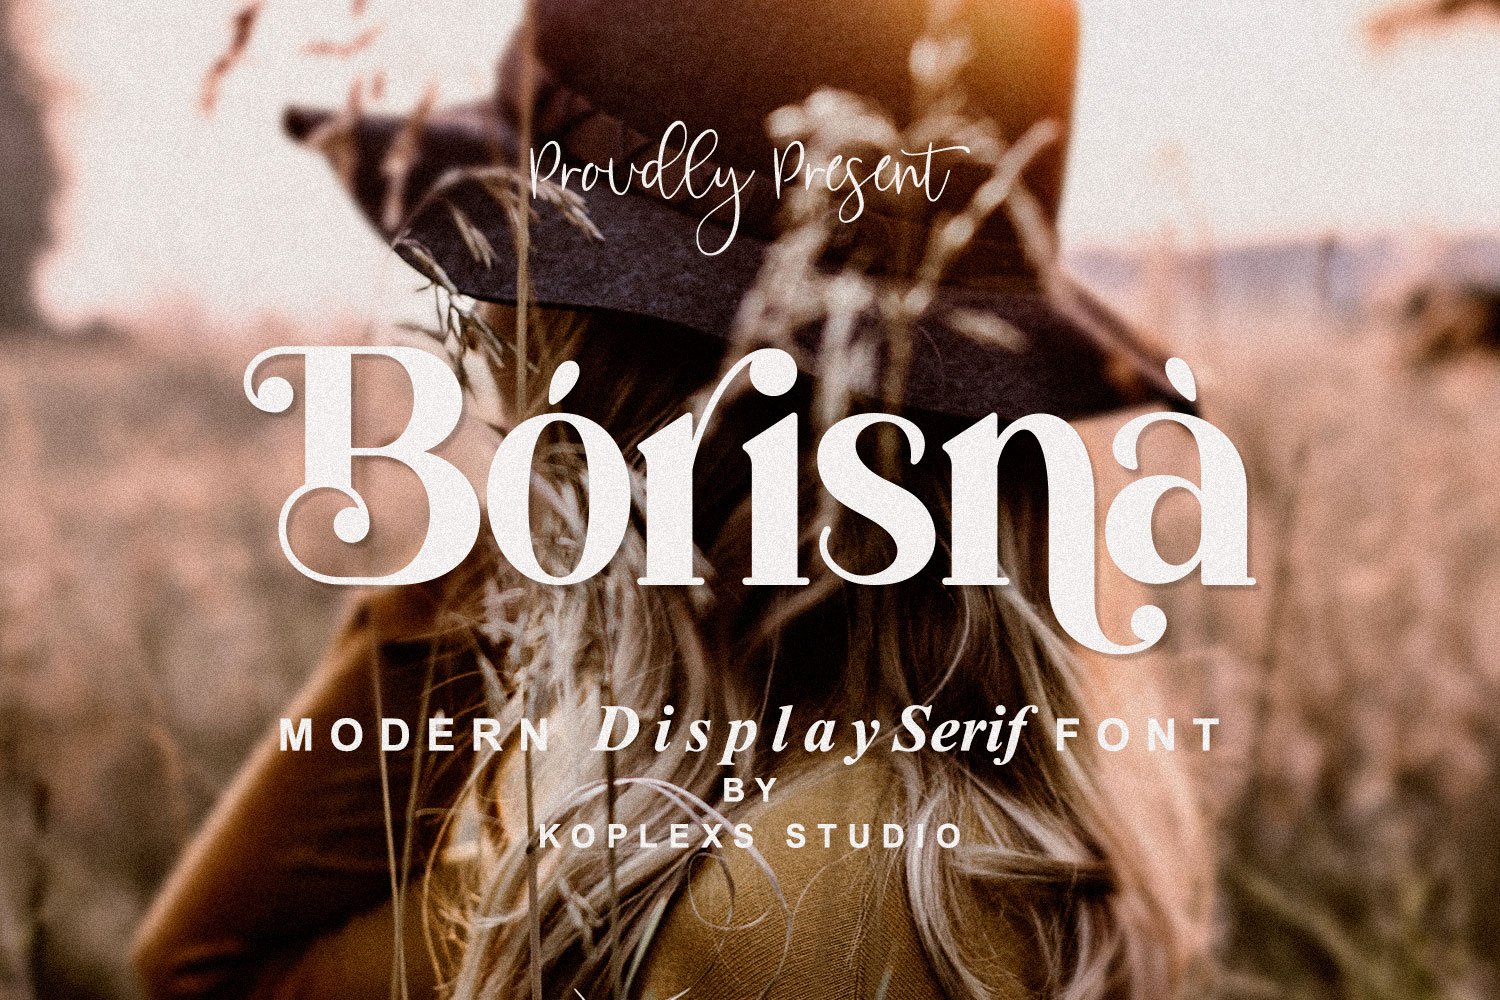 Borisna - Modern Display Serif Font cover image.